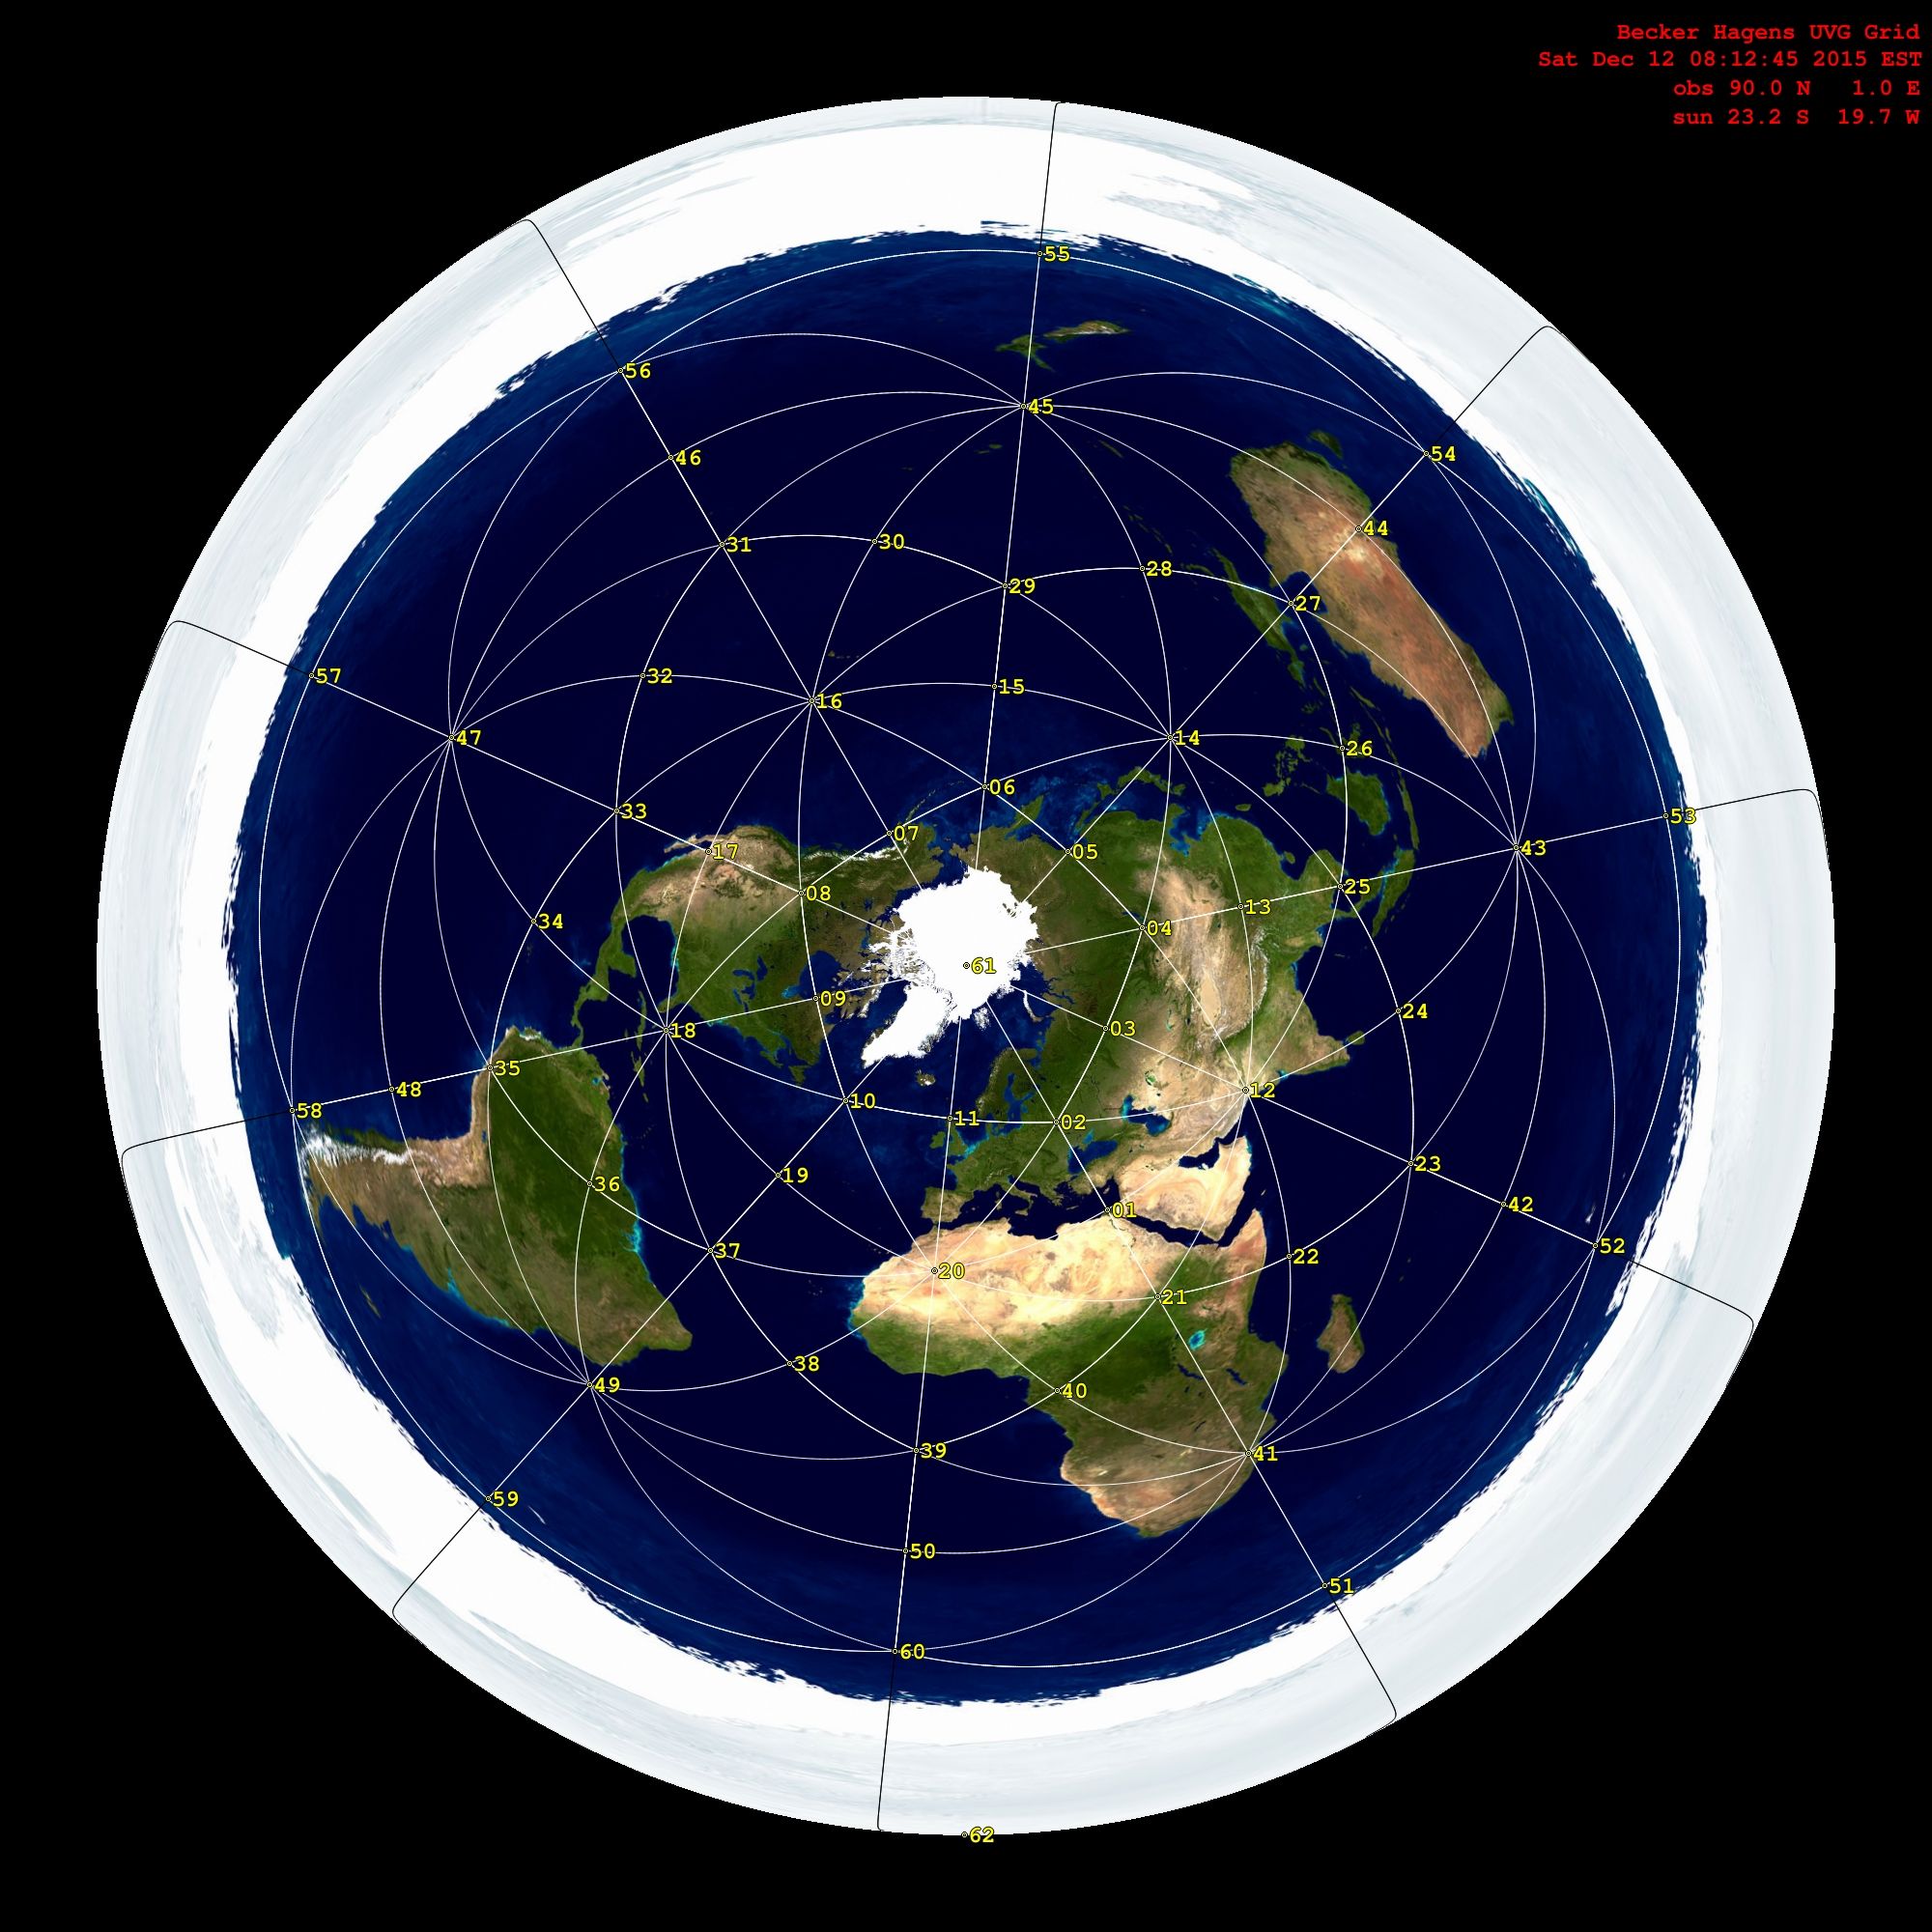 Flat earth map